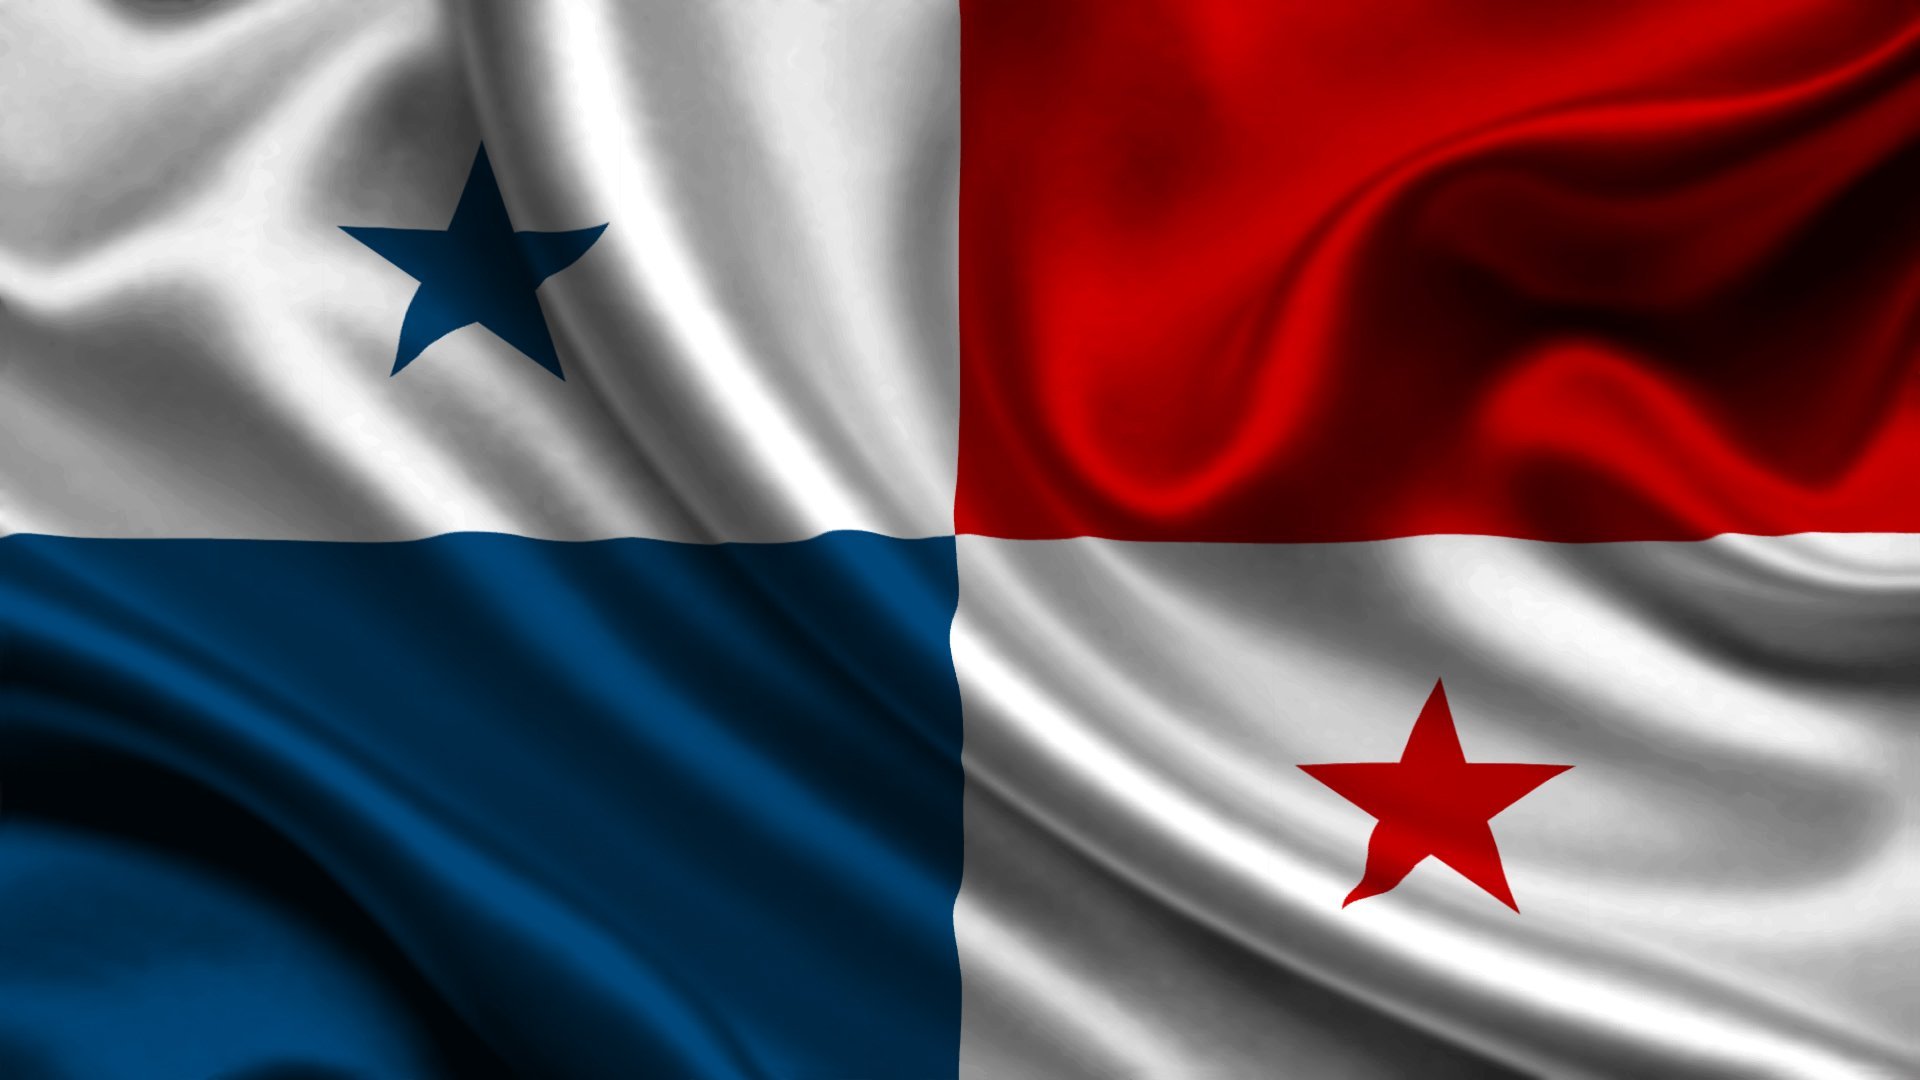 panama flag wallpaper image